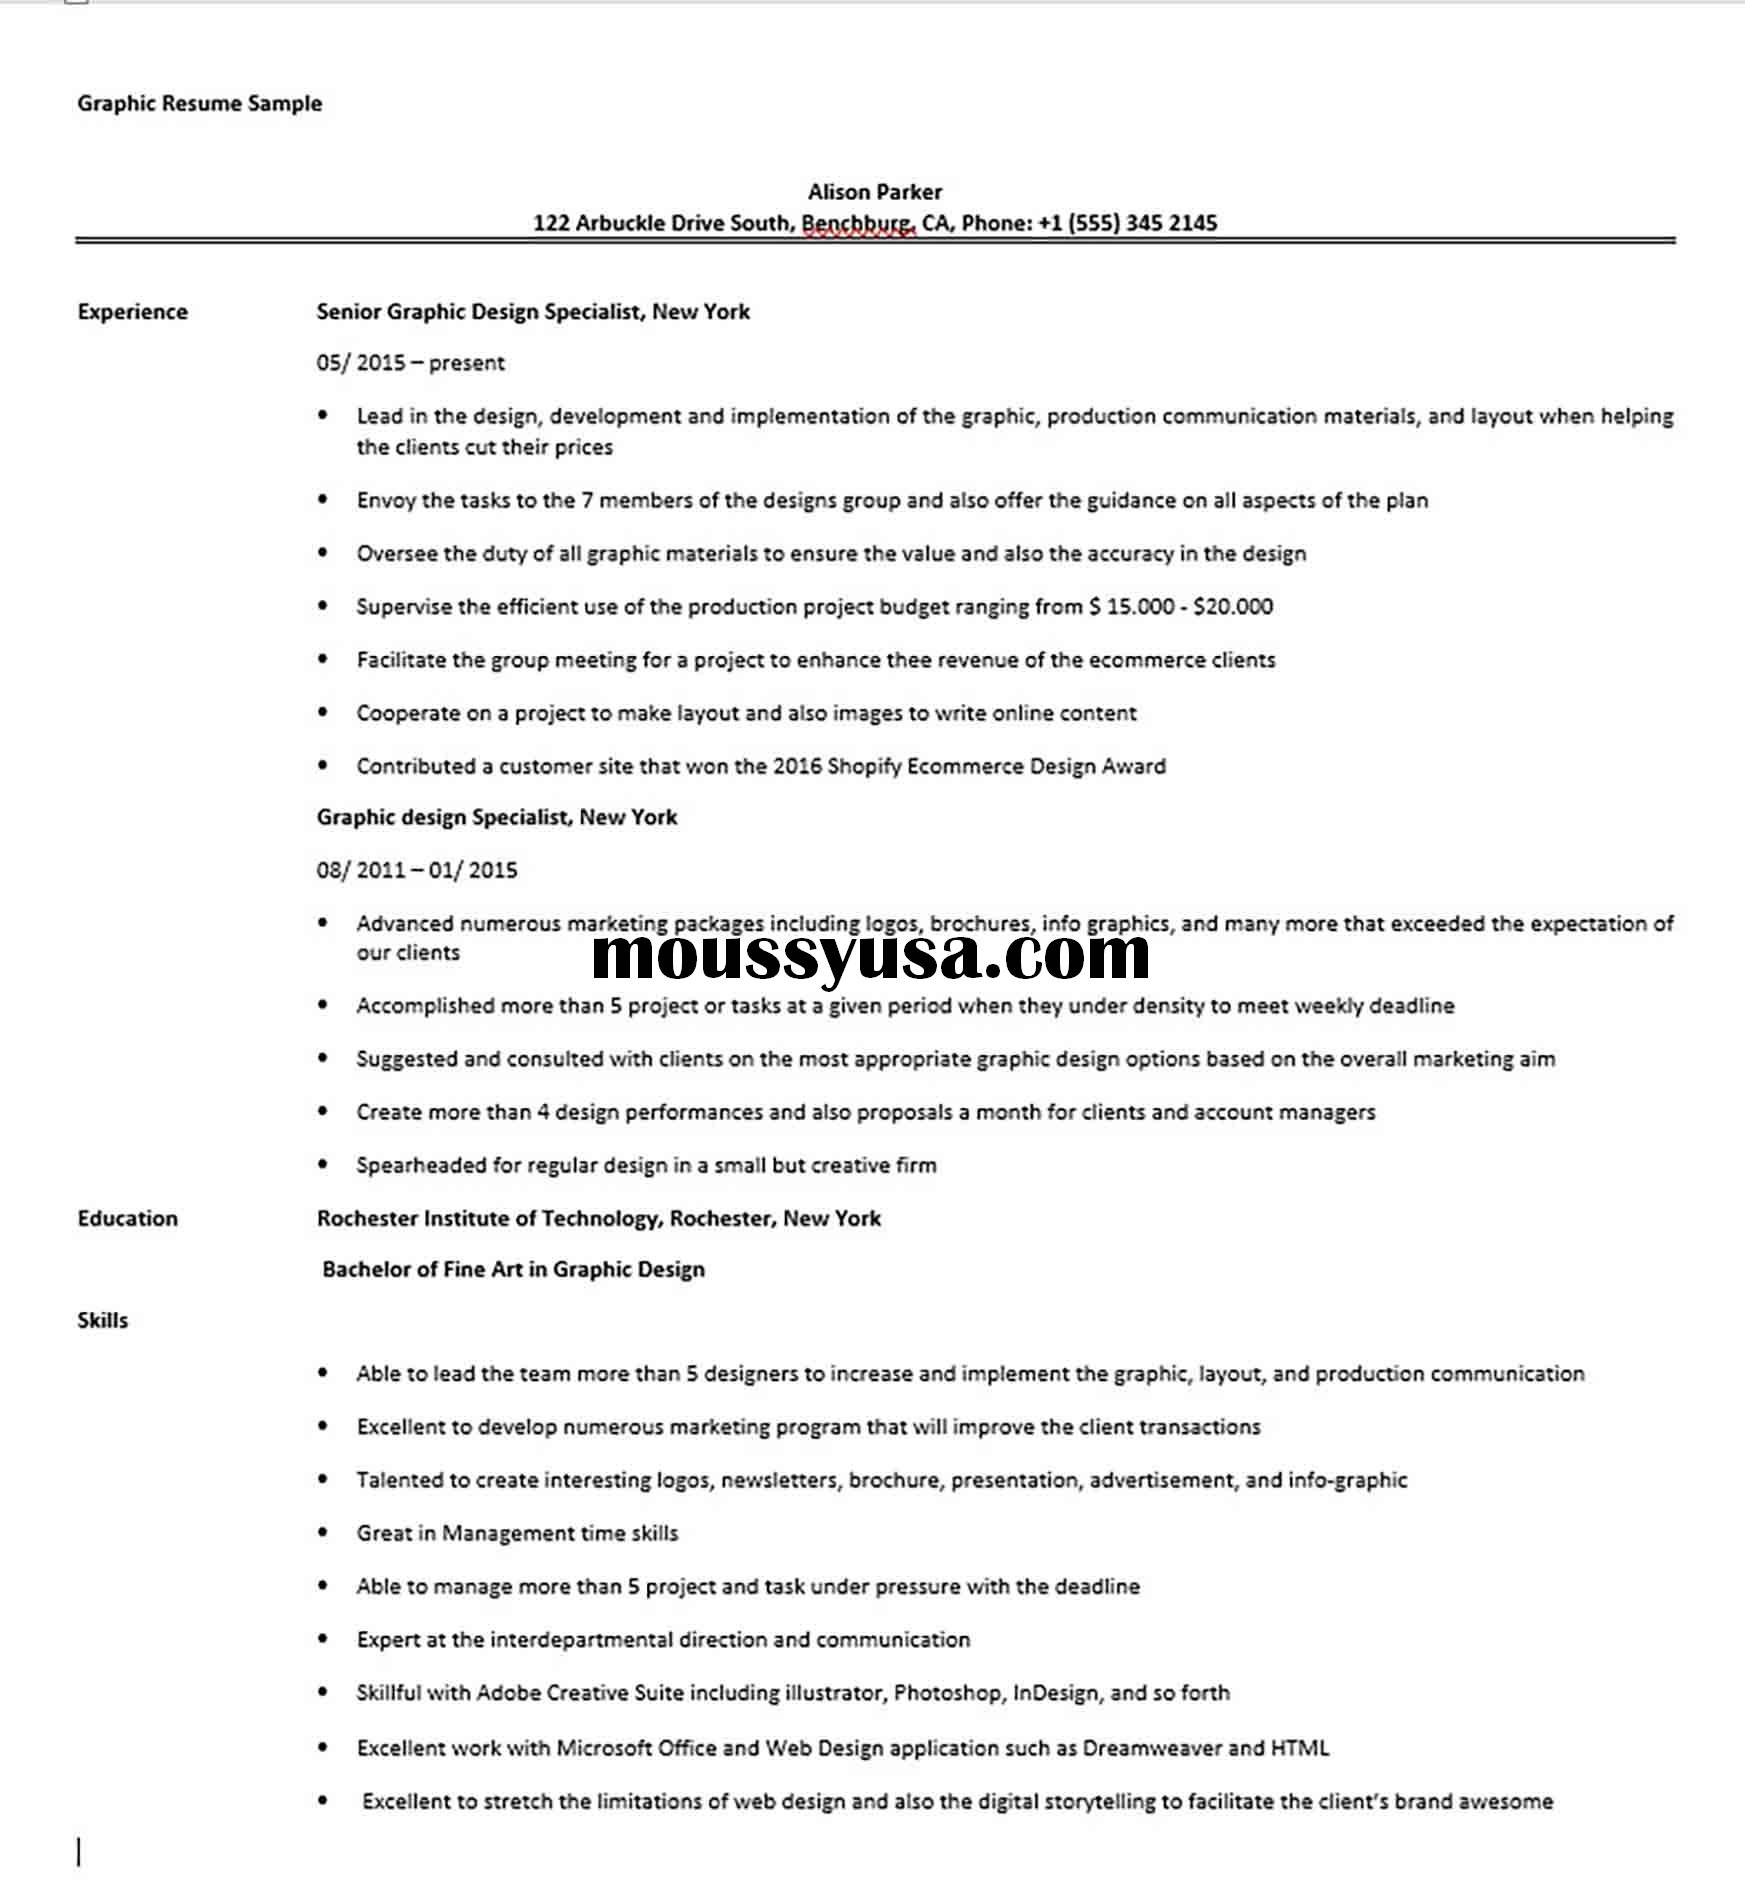 Graphic Resume Sample